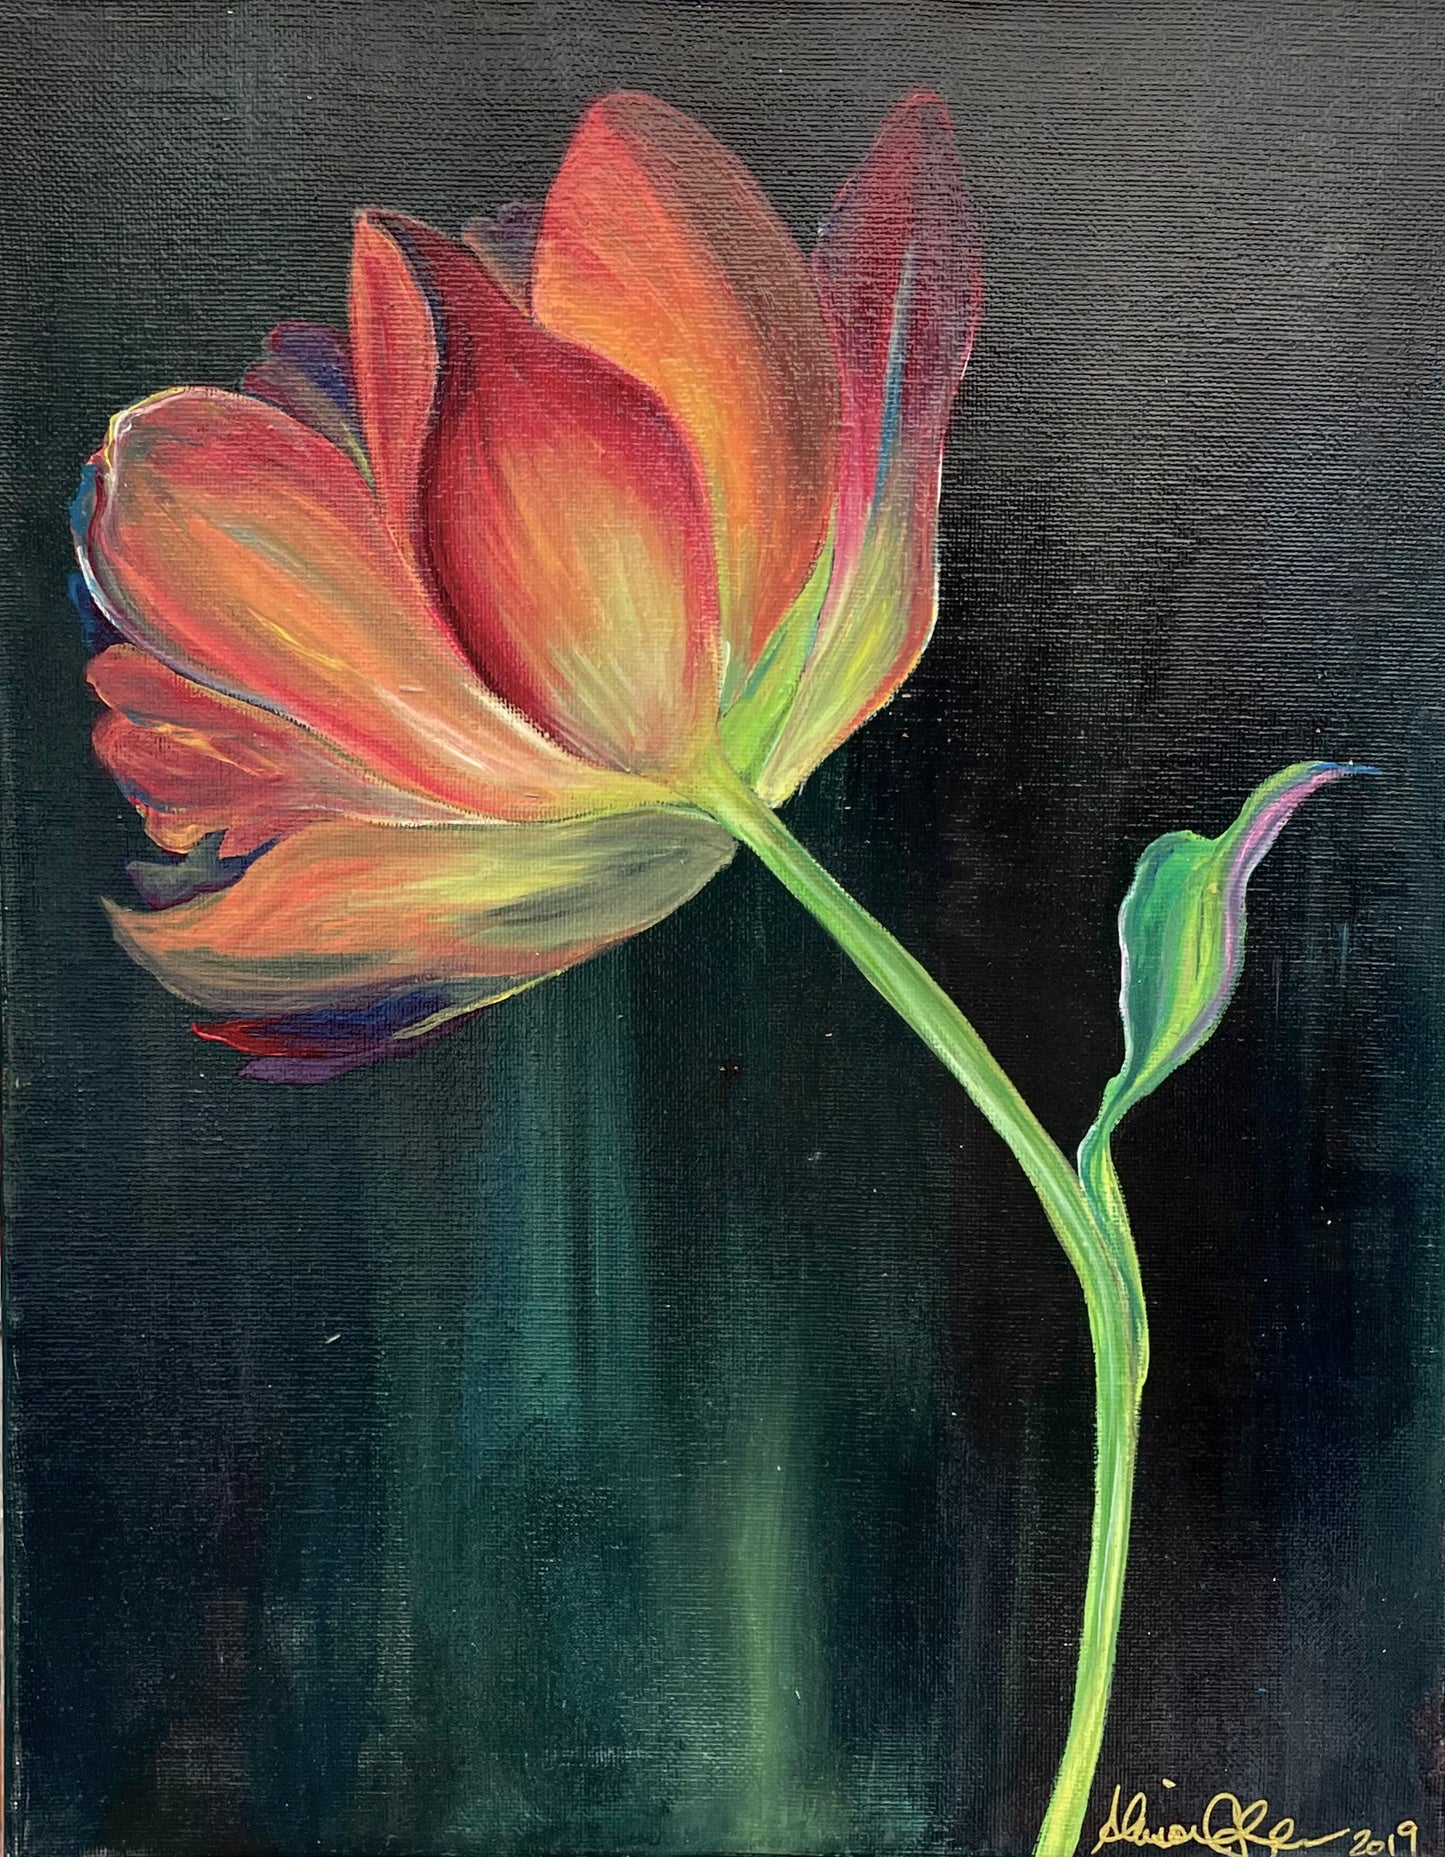 Flower Four par Allison Grainger